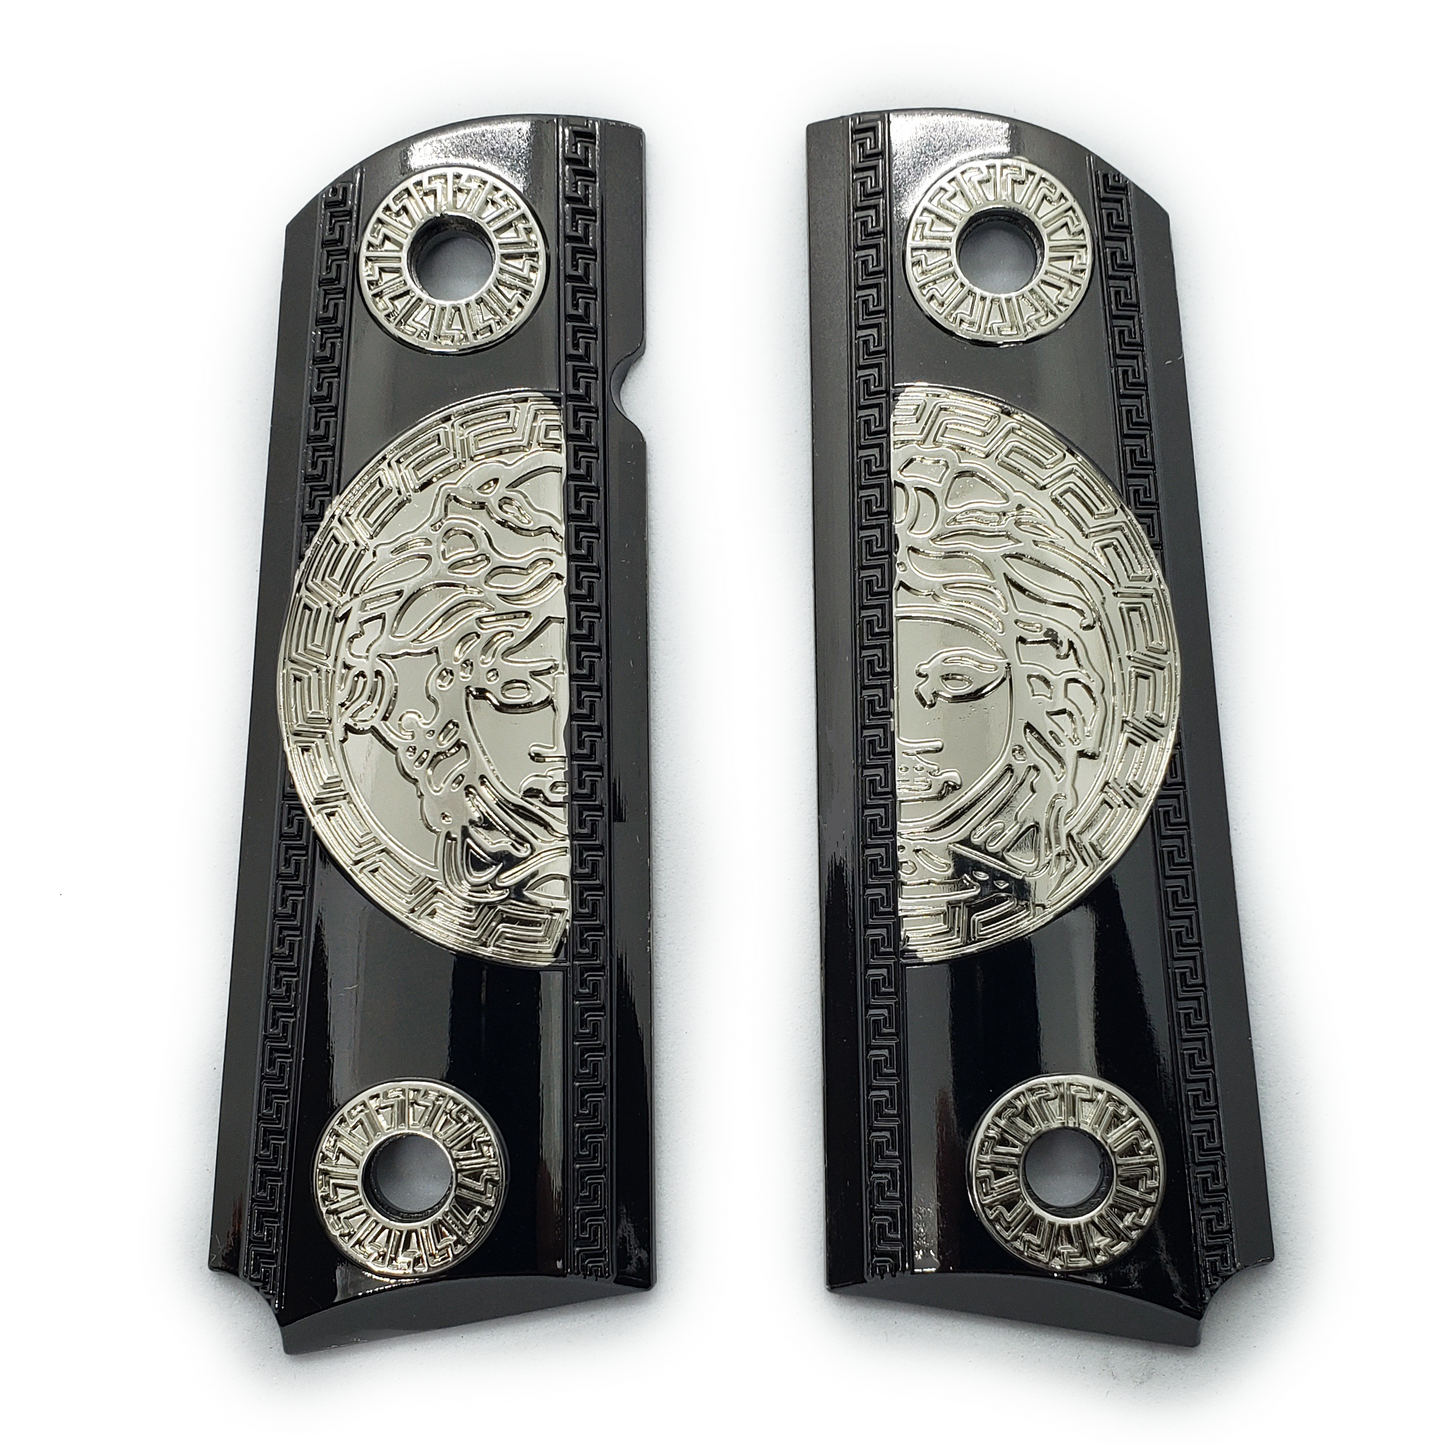 1911 Grips Full Size Medusa Metal Ambi Cut Black Nickel